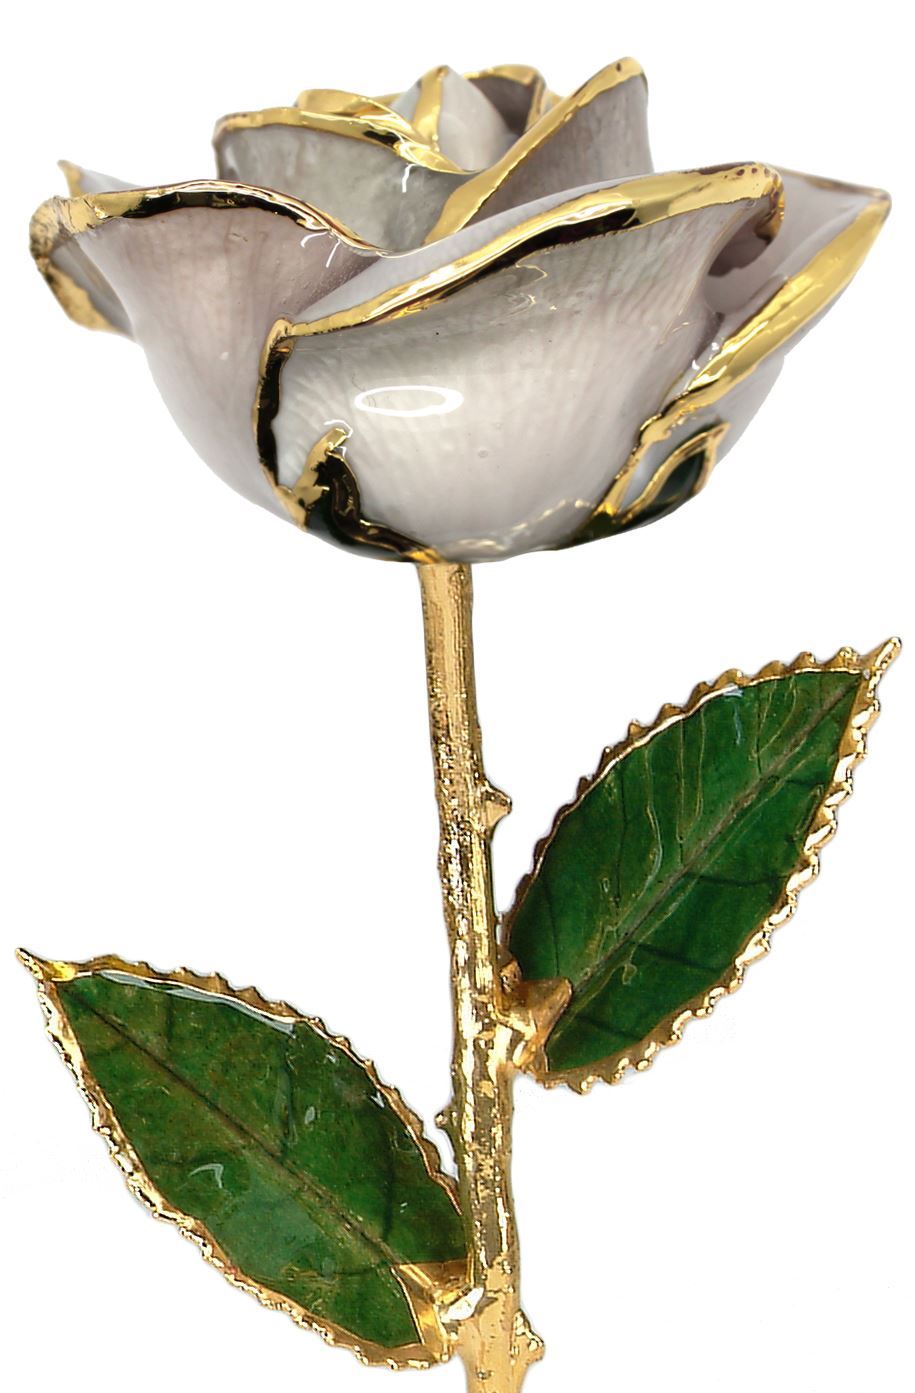 https://www.arthursjewelers.com/content/images/thumbs/Original/white-rose_1-19361801.jpeg